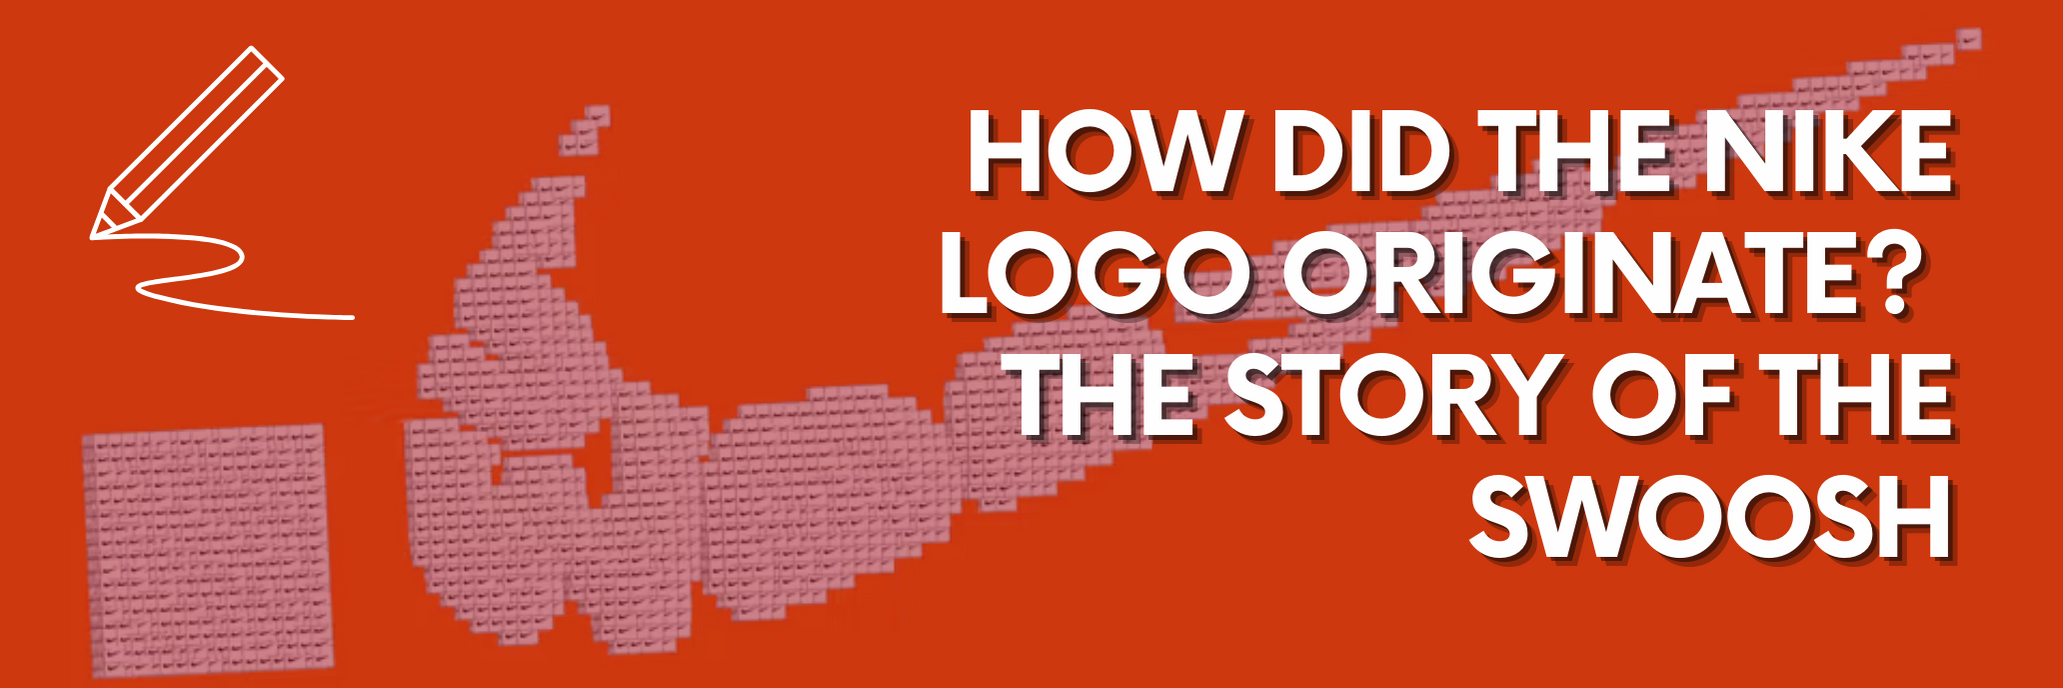 How Did the Nike Logo Originate